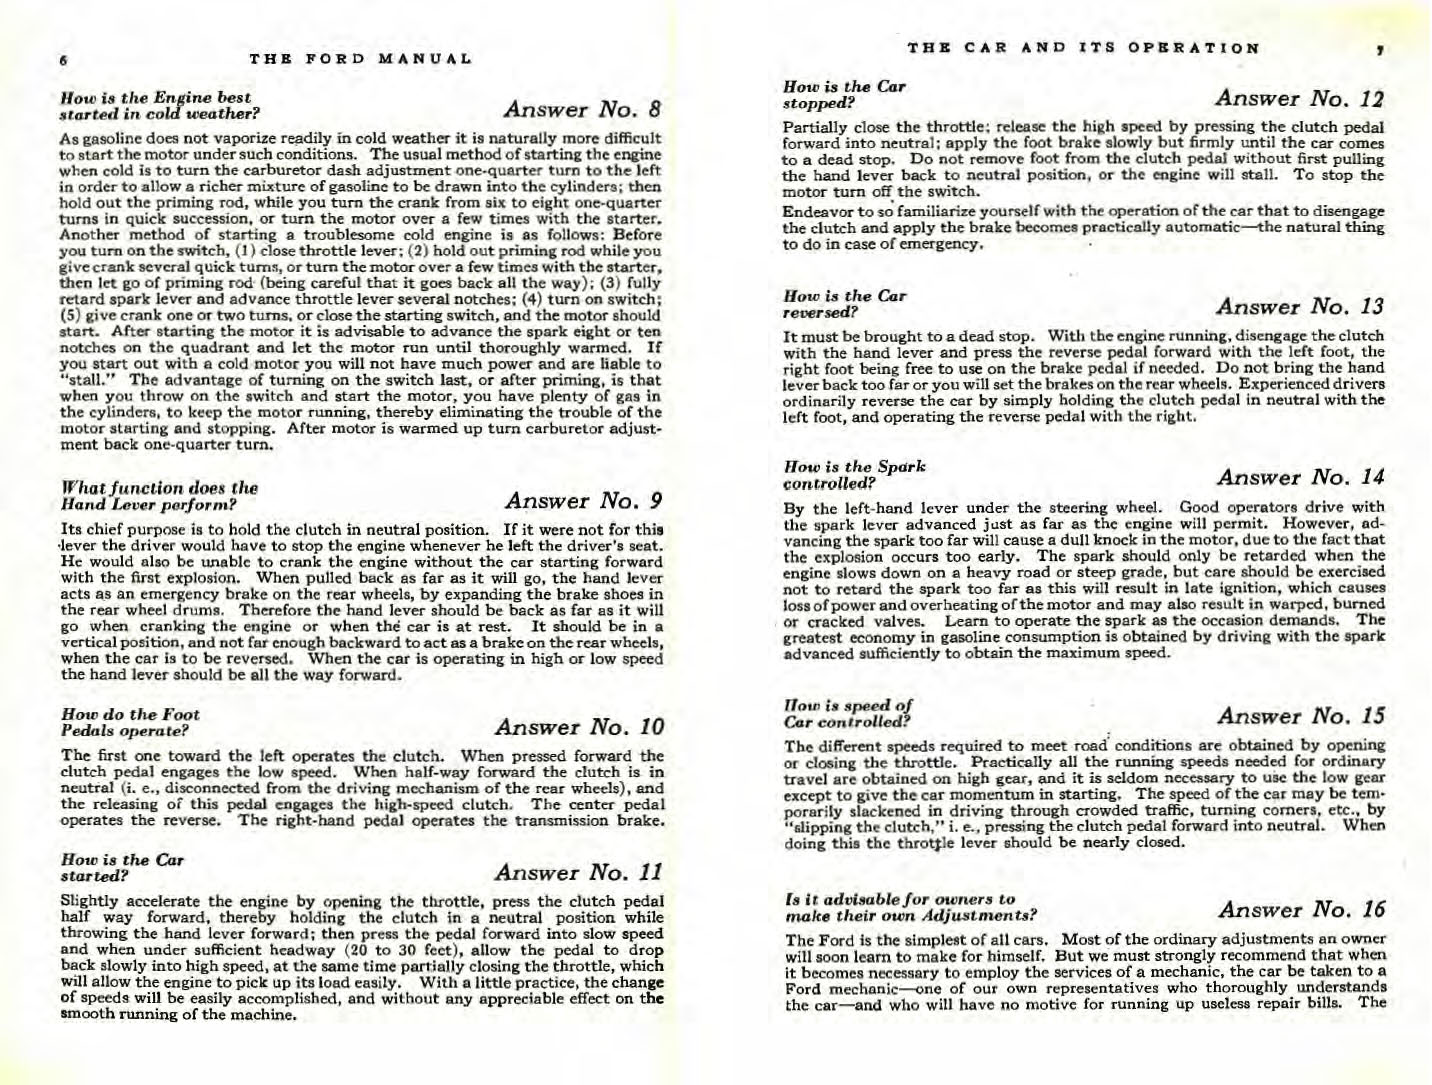 n_1926 Ford Owners Manual-06-07.jpg